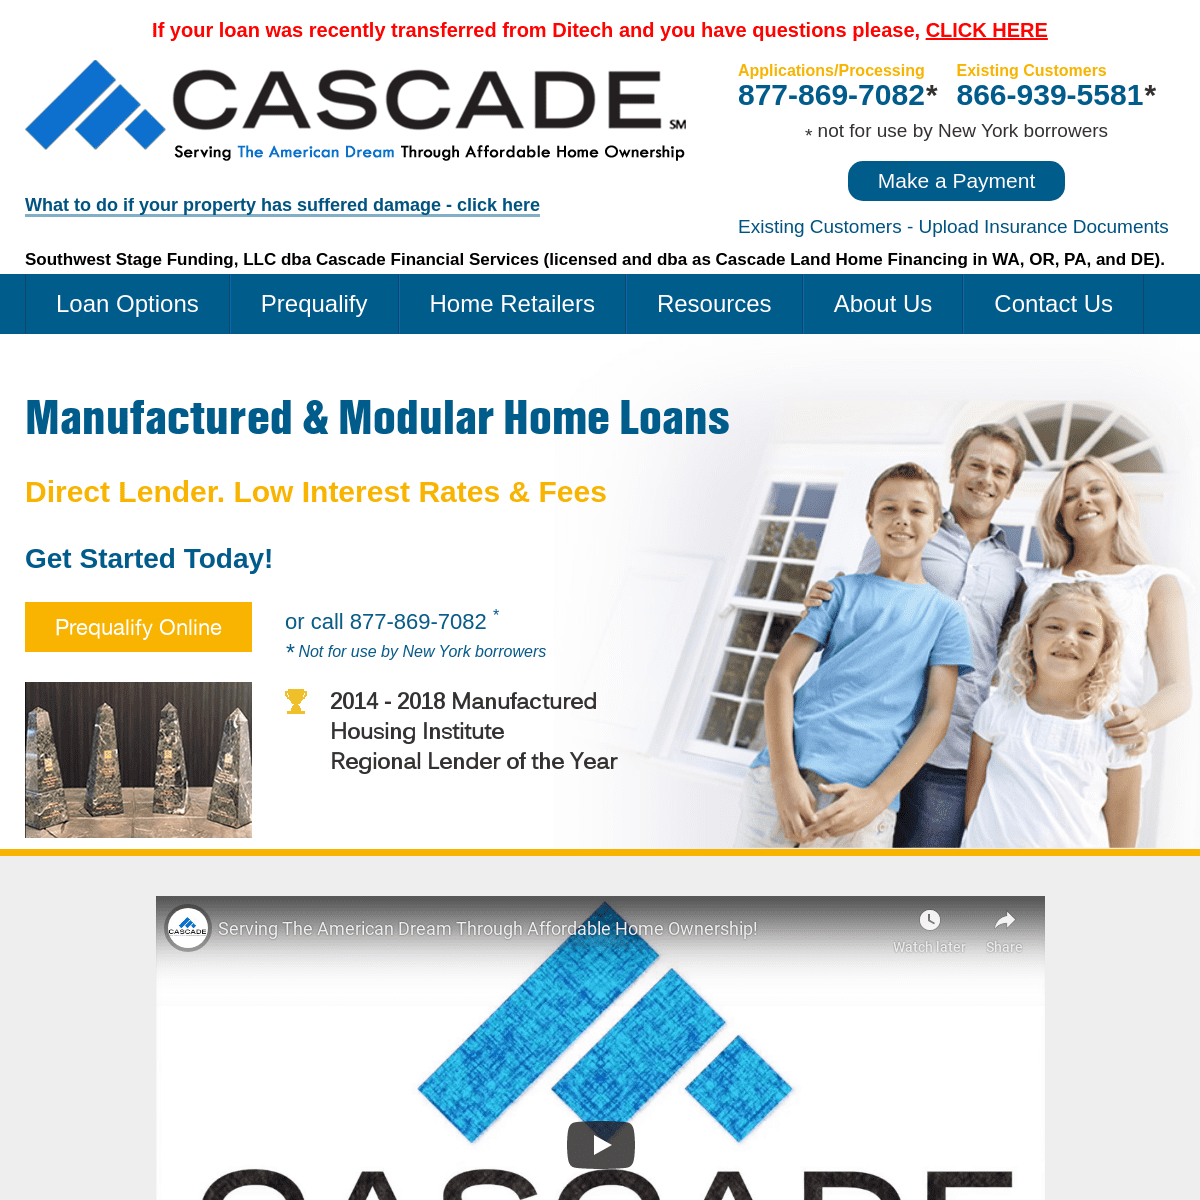 A complete backup of cascadeloans.com